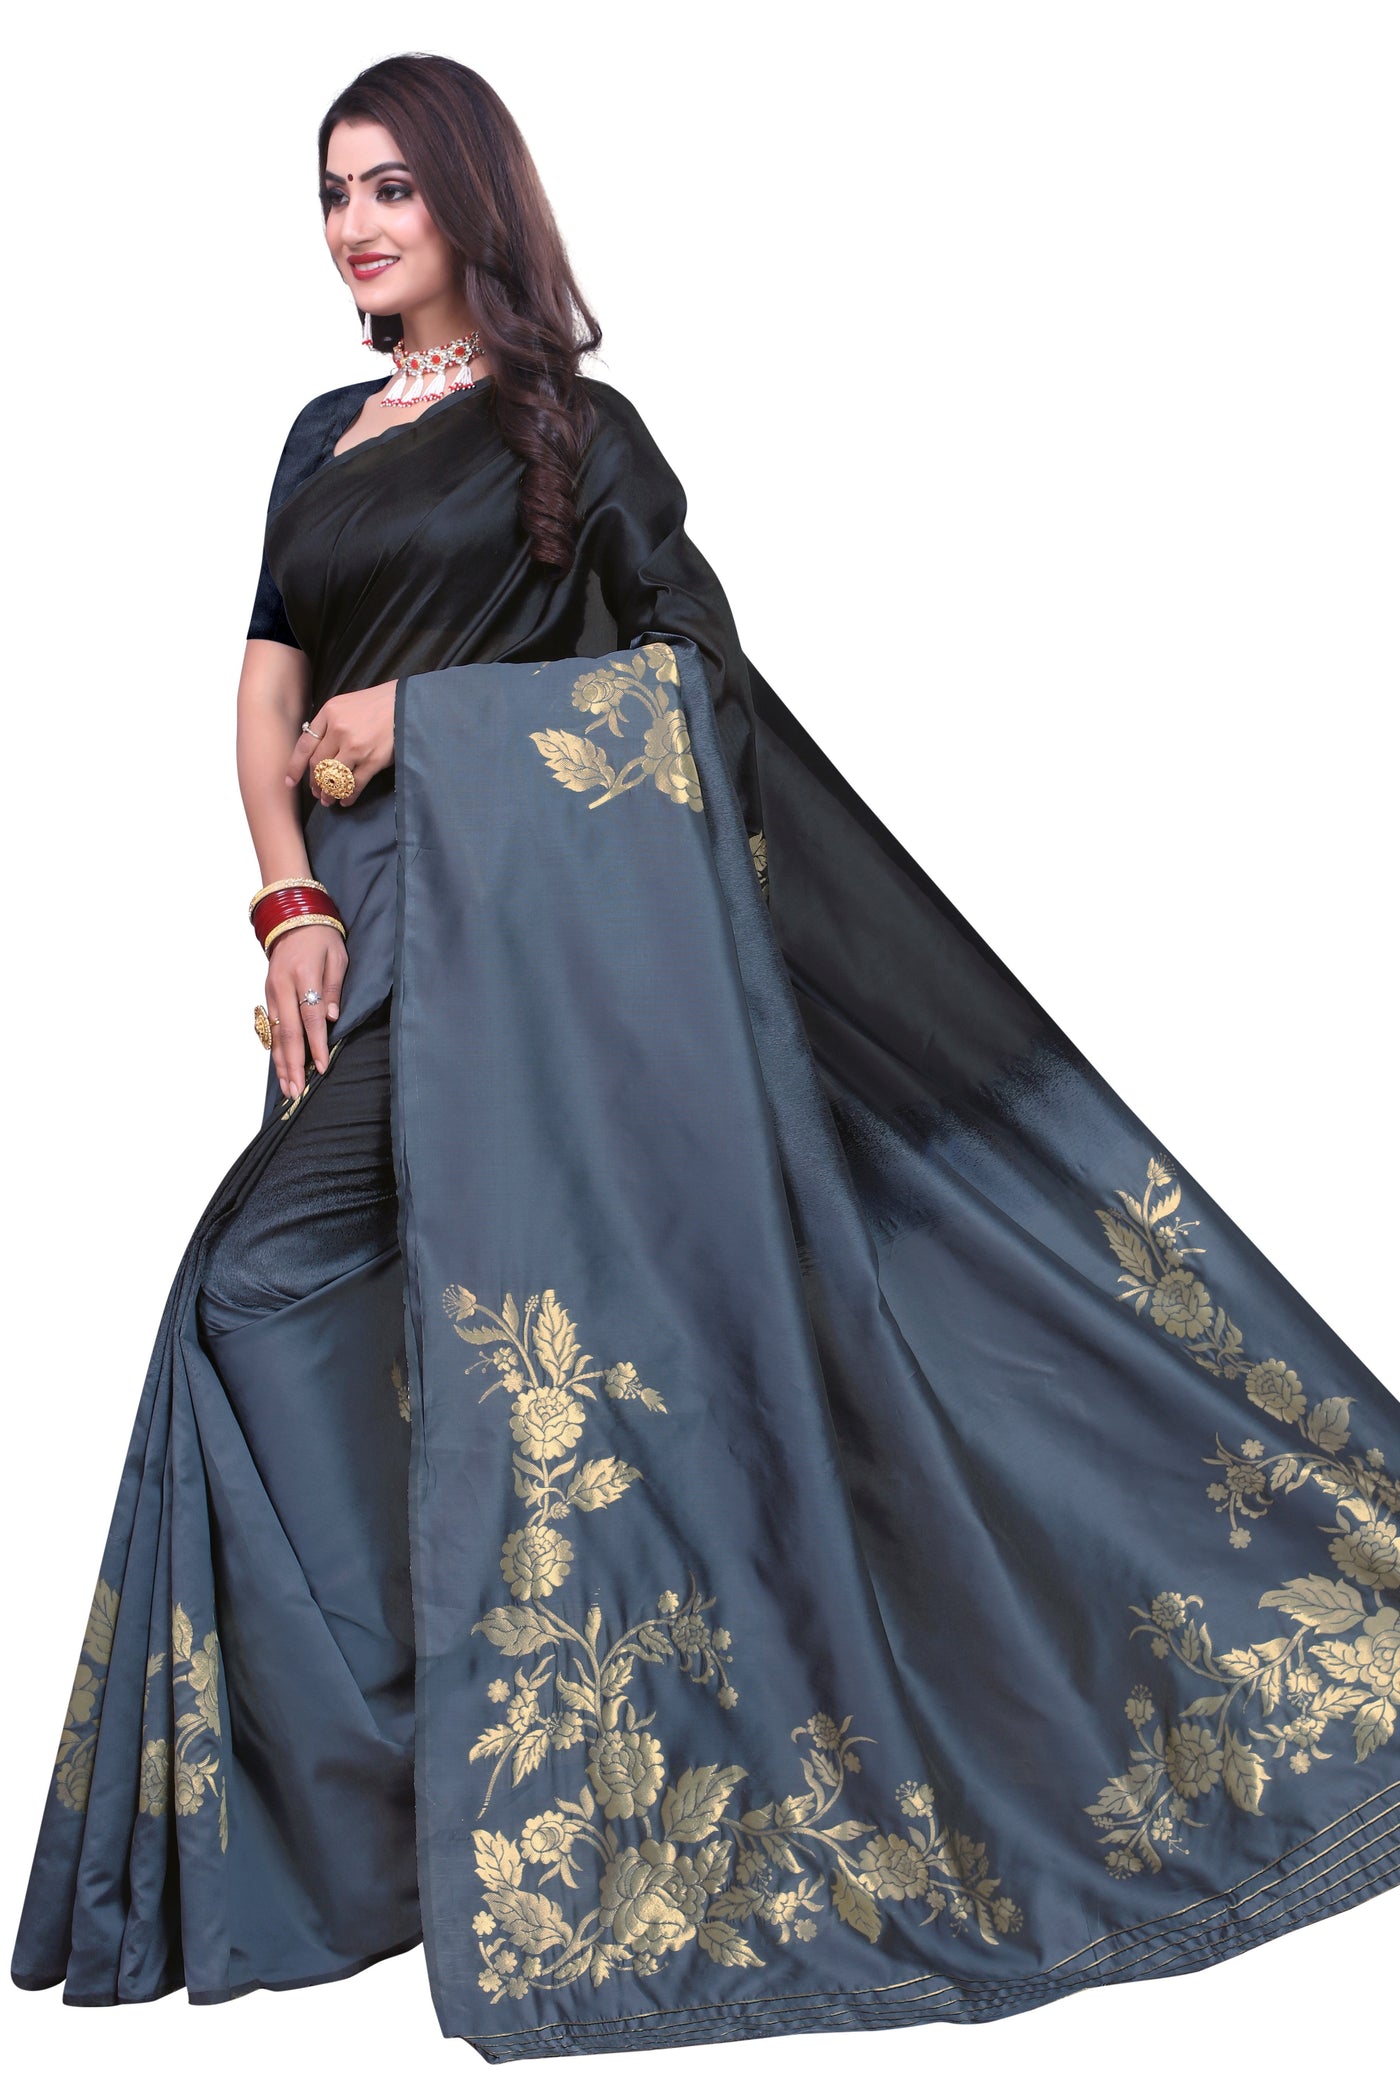 Banarsi Art Silk Black Saree With Blouse